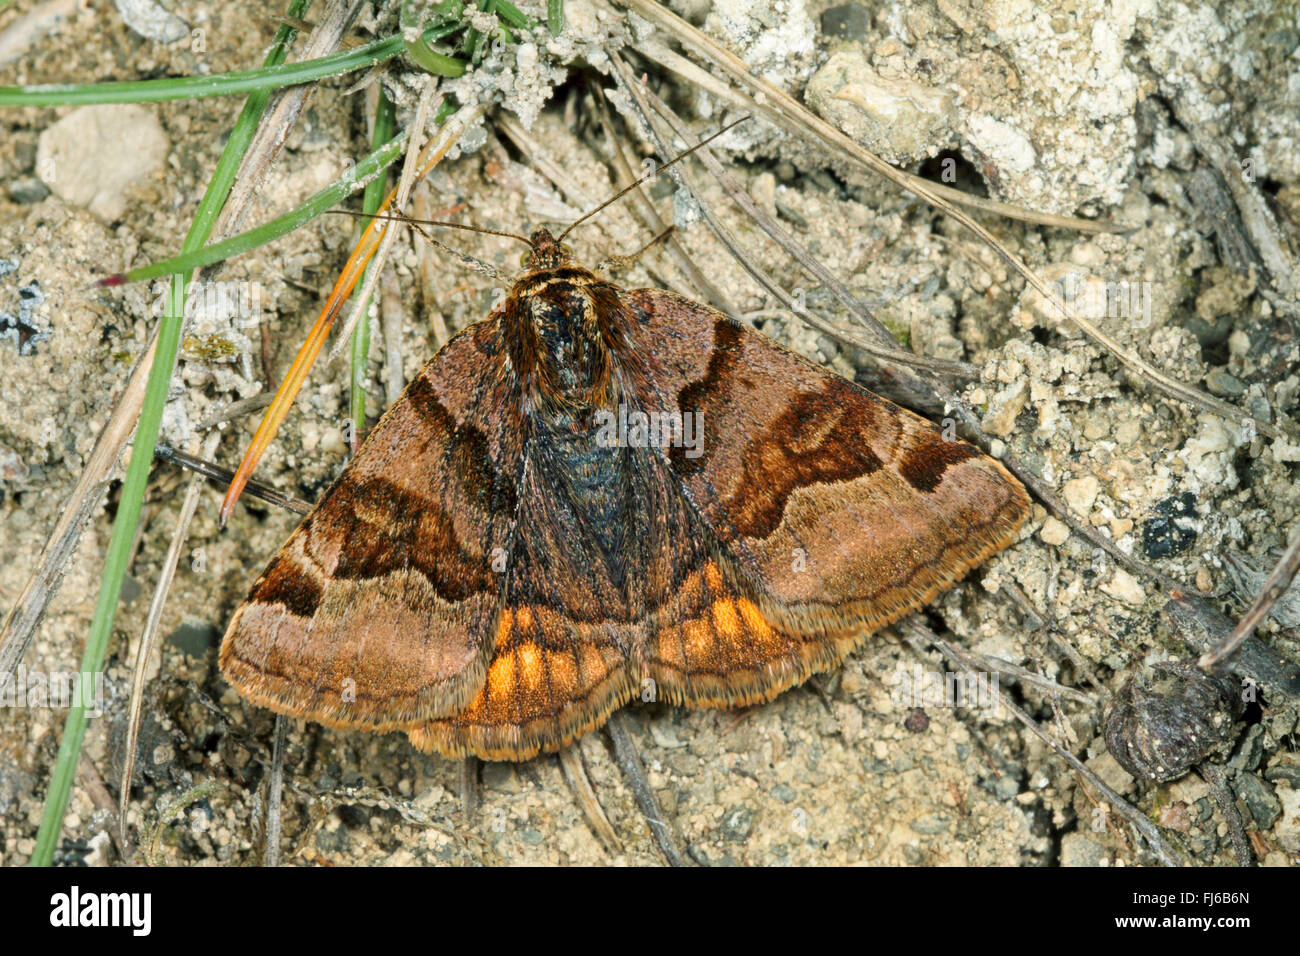 burnet companion (Ectypa glyphica, Euclidia glyphica), on bark, Germany Stock Photo